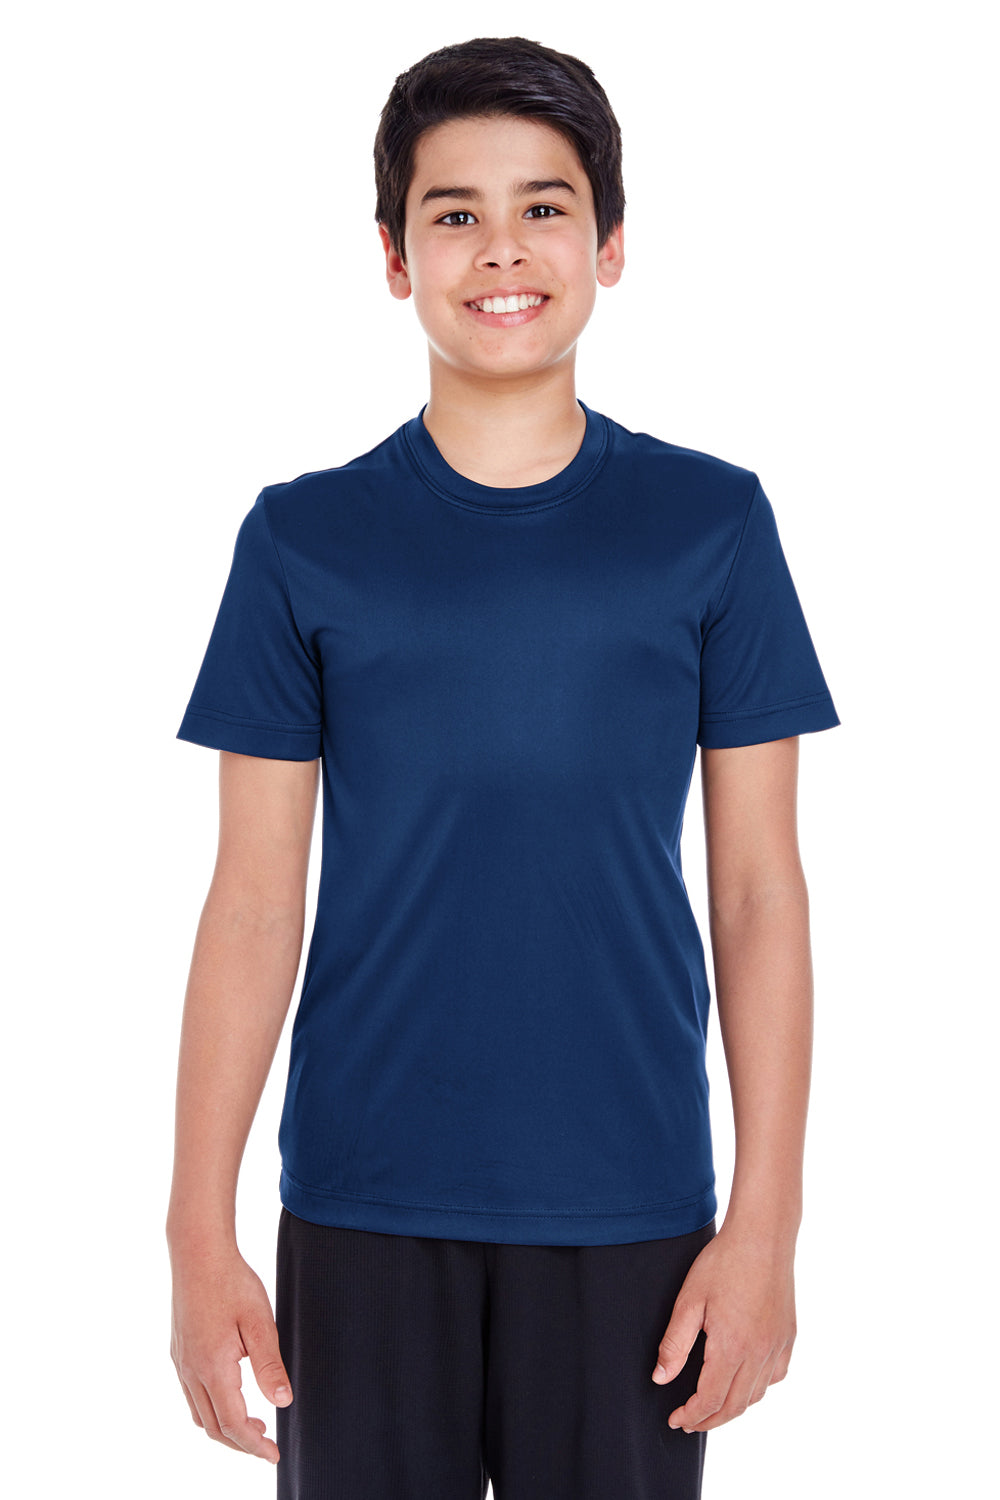 Team 365 TT11Y Youth Zone Performance Moisture Wicking Short Sleeve Crewneck T-Shirt Navy Blue Front